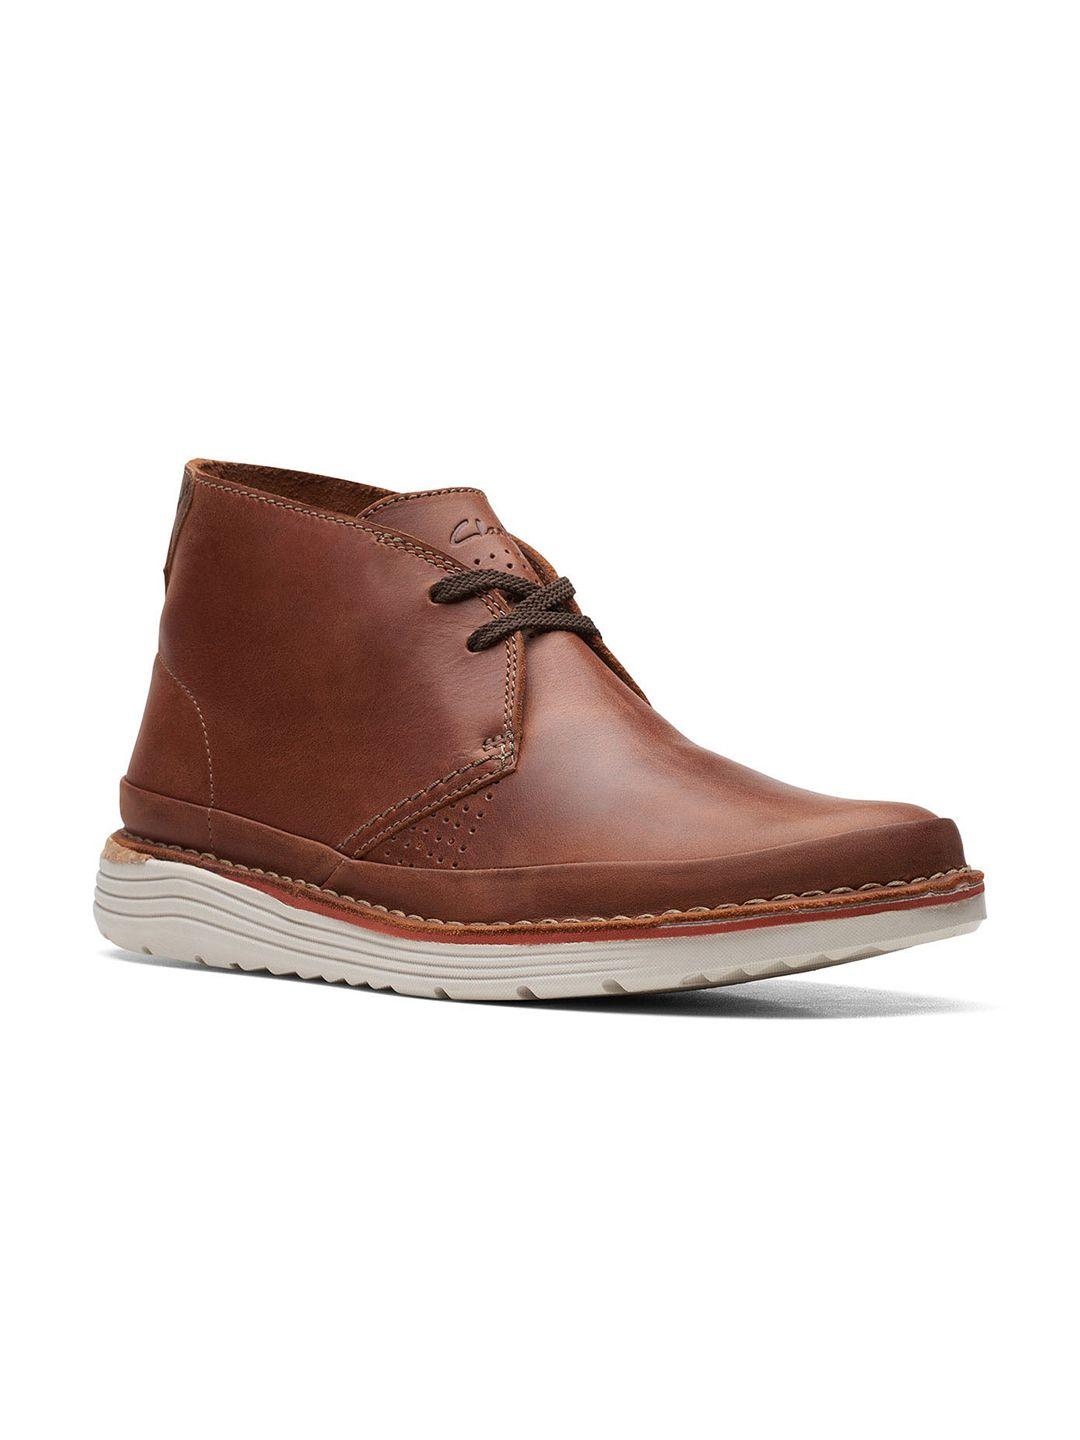 clarks men brown solid leather regular boots